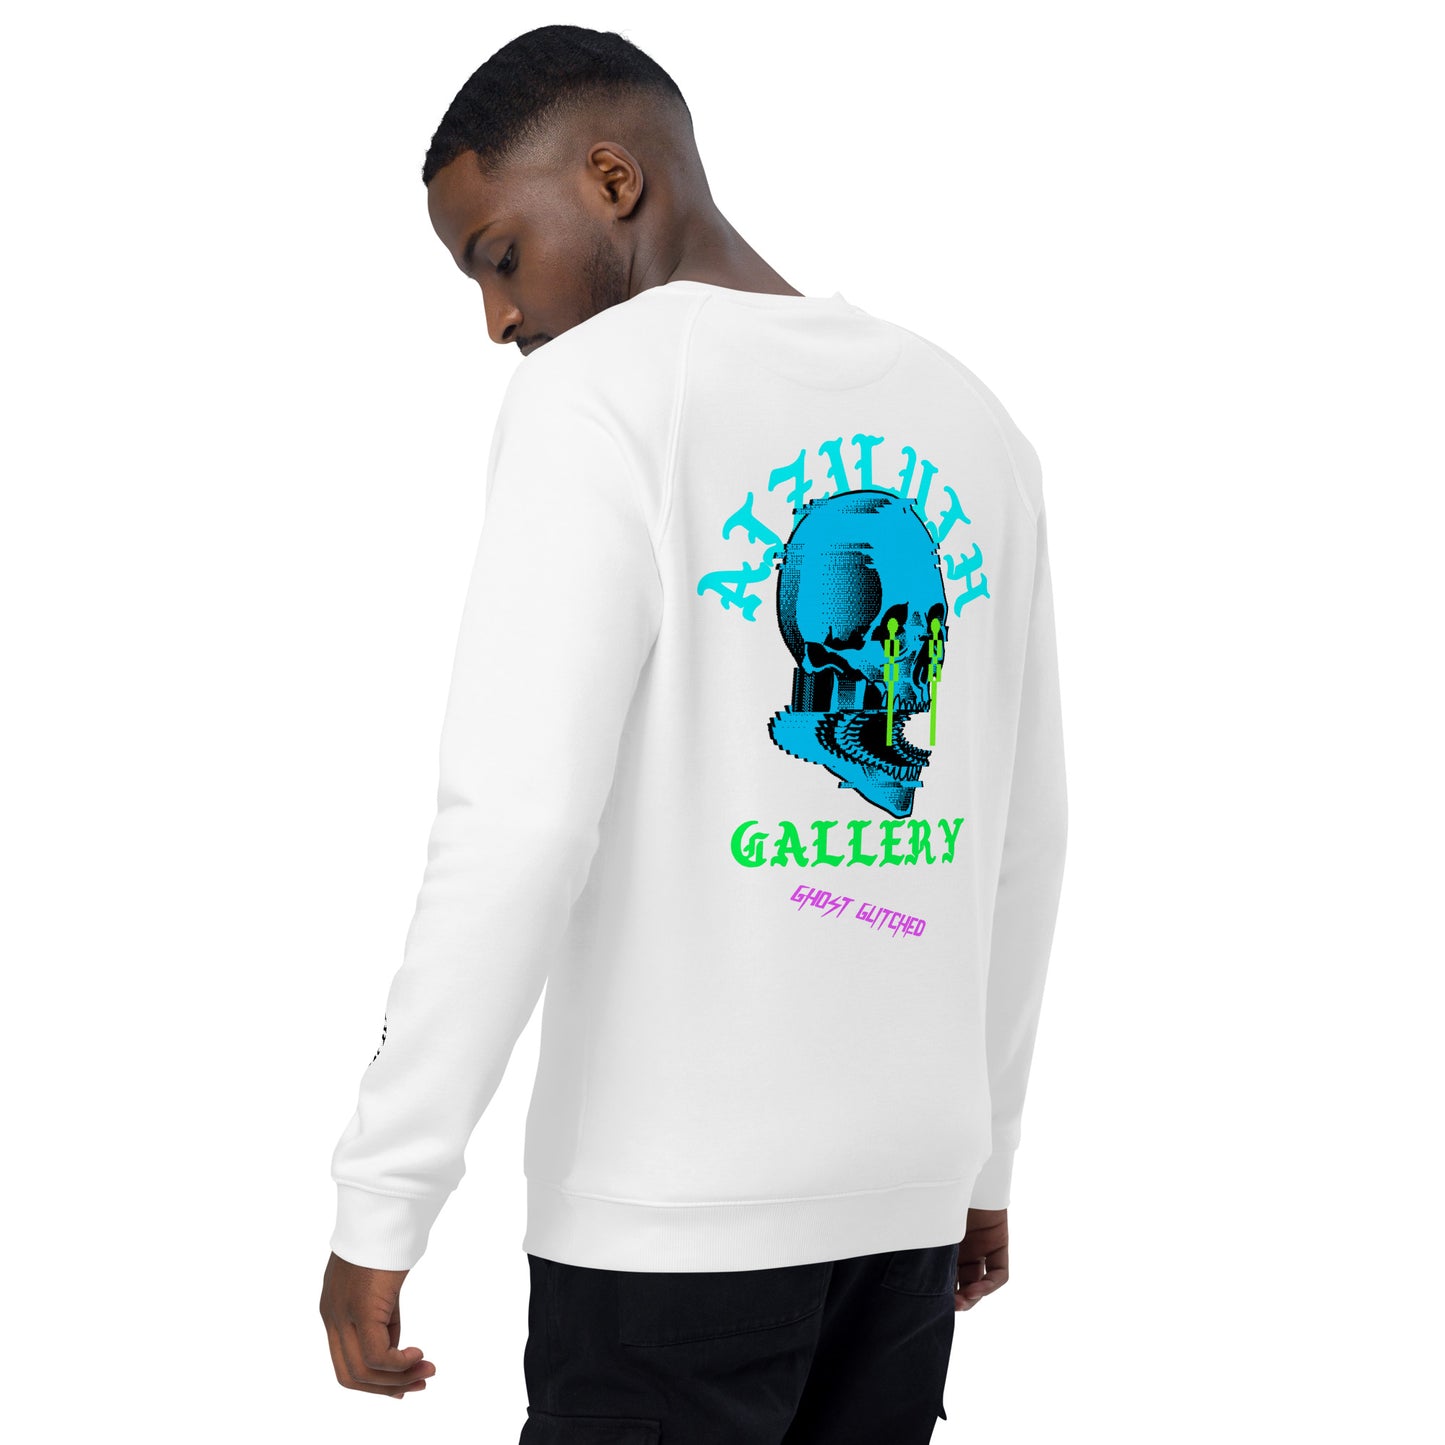 Atziluth "Ghost Glicthed" Unisex organic raglan sweatshirt